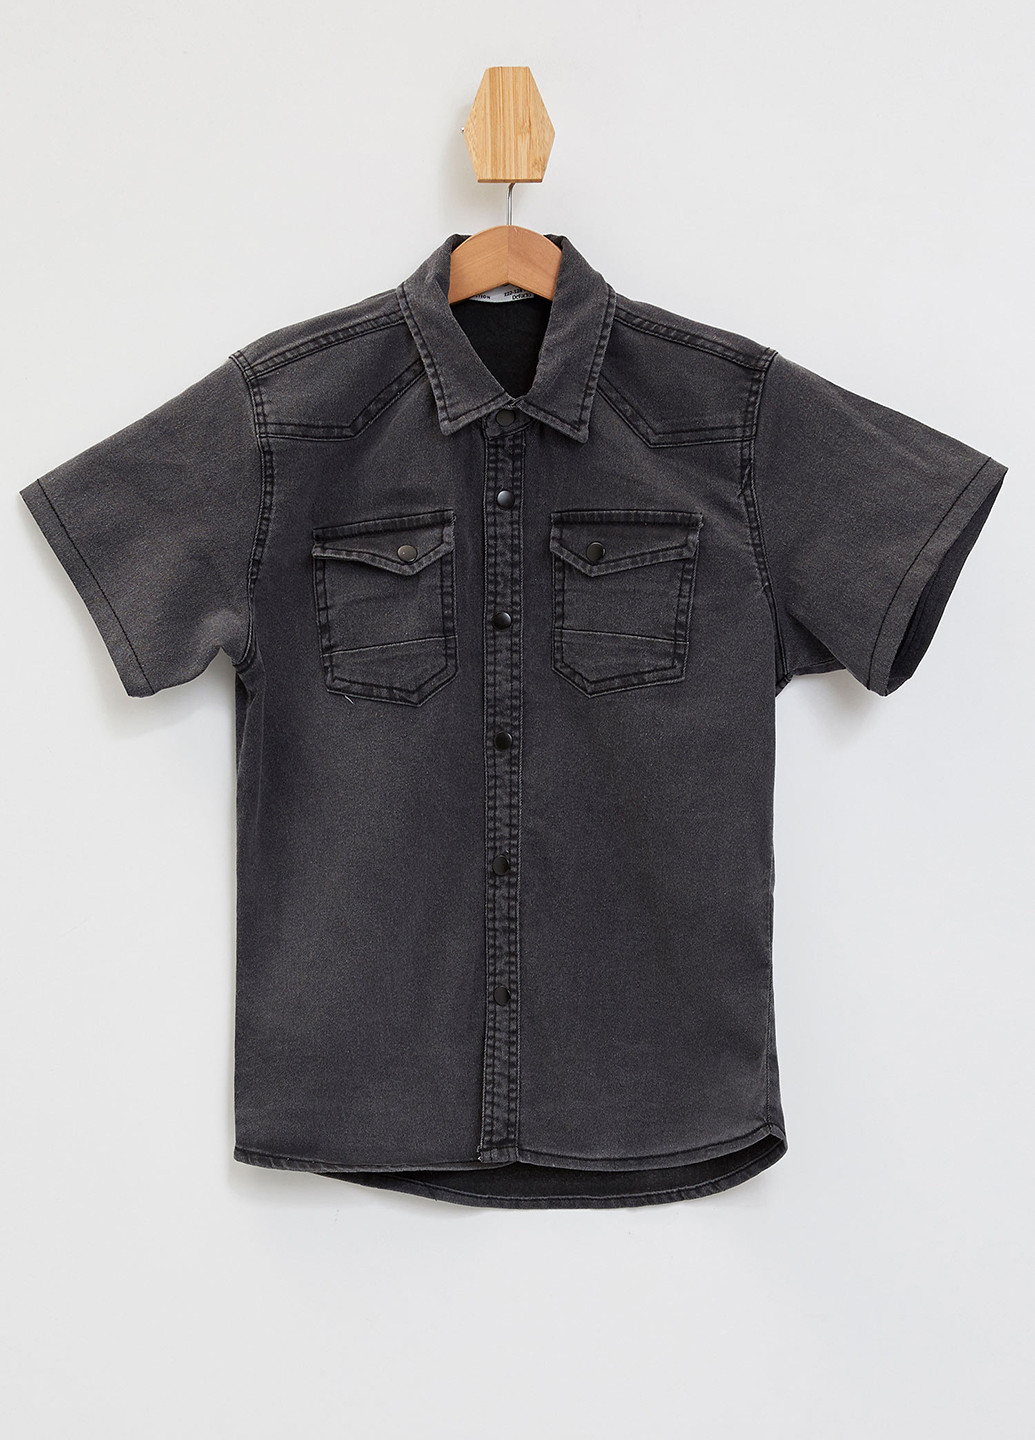 Темно-серая джинсовая рубашка DeFacto с коротким рукавом